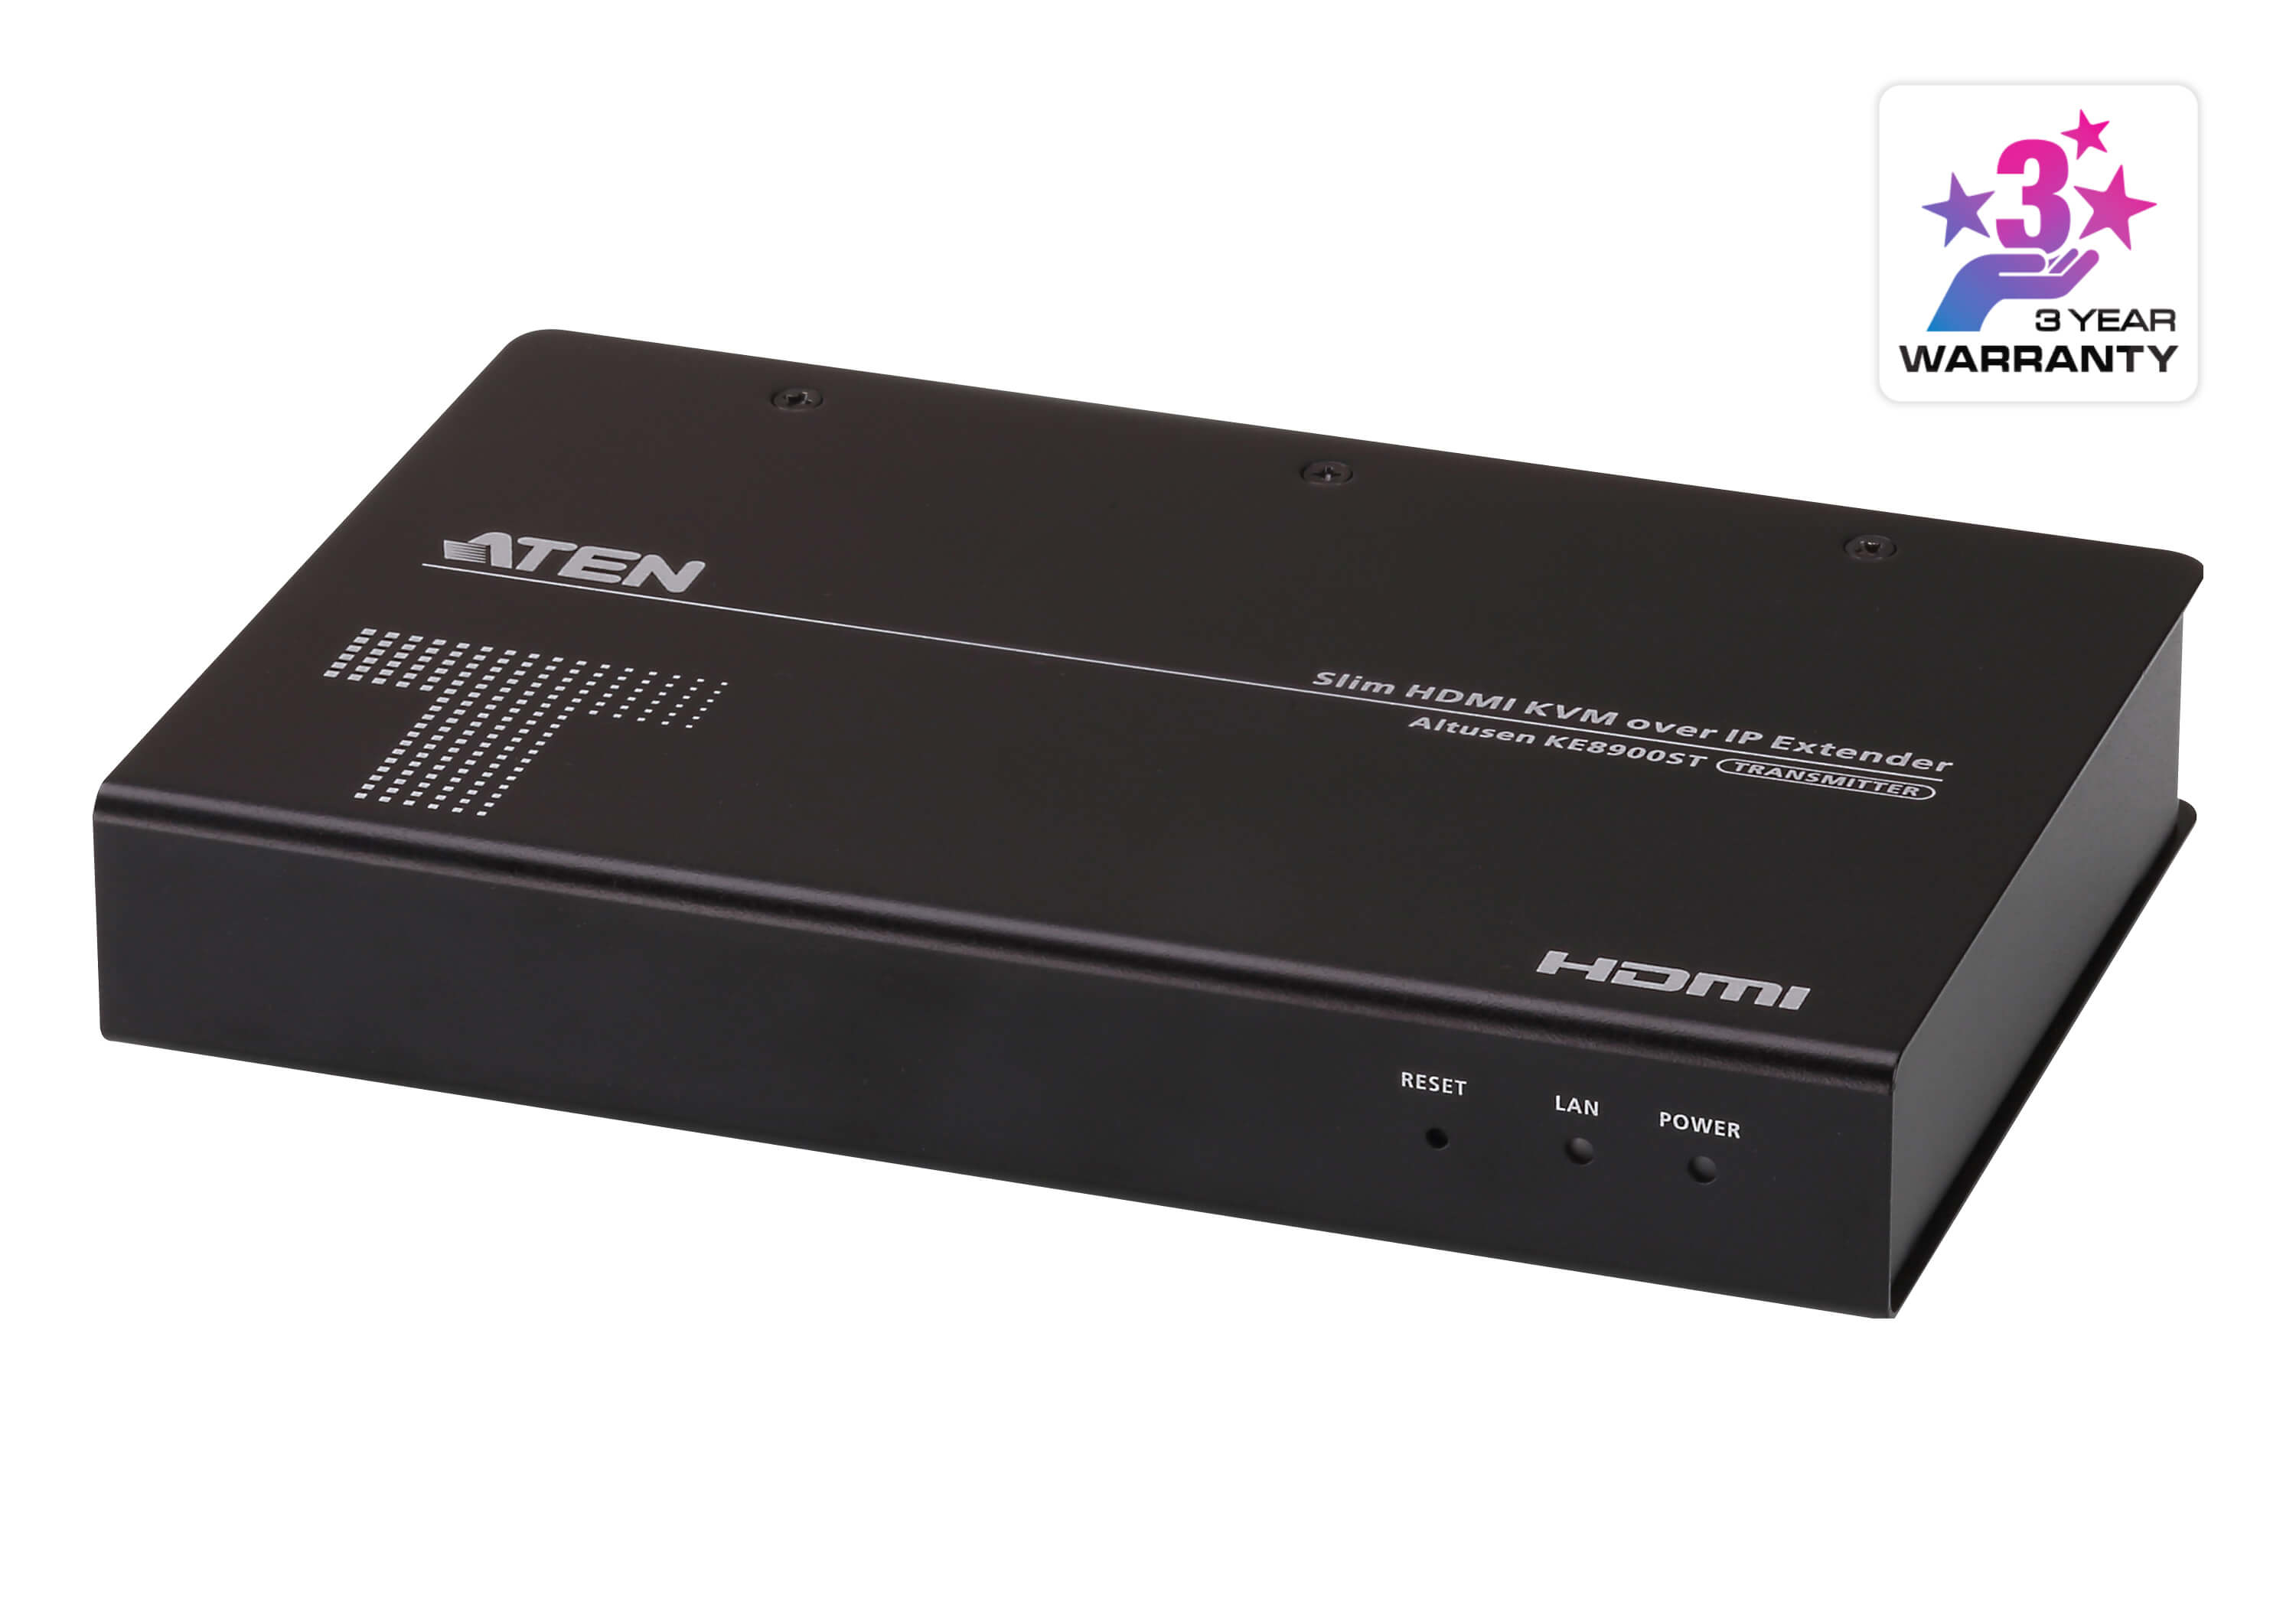 ATEN ALTUSEN KE8900ST Slim HDMI Single Display KVM over IP Transmitter